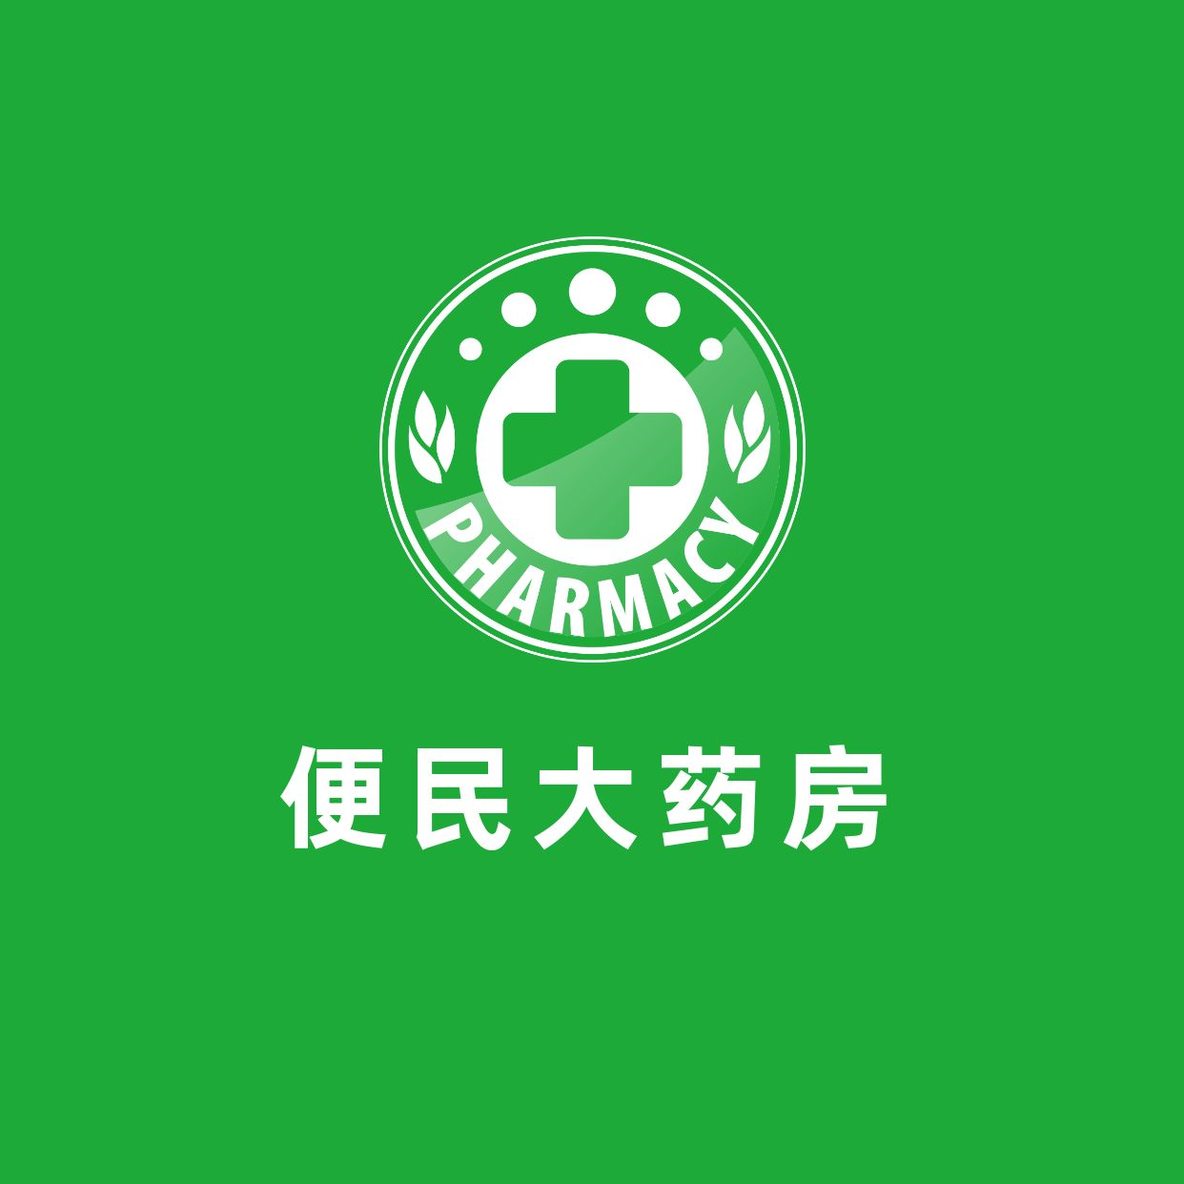 logo药店在绿色背景上的圆矢量标志